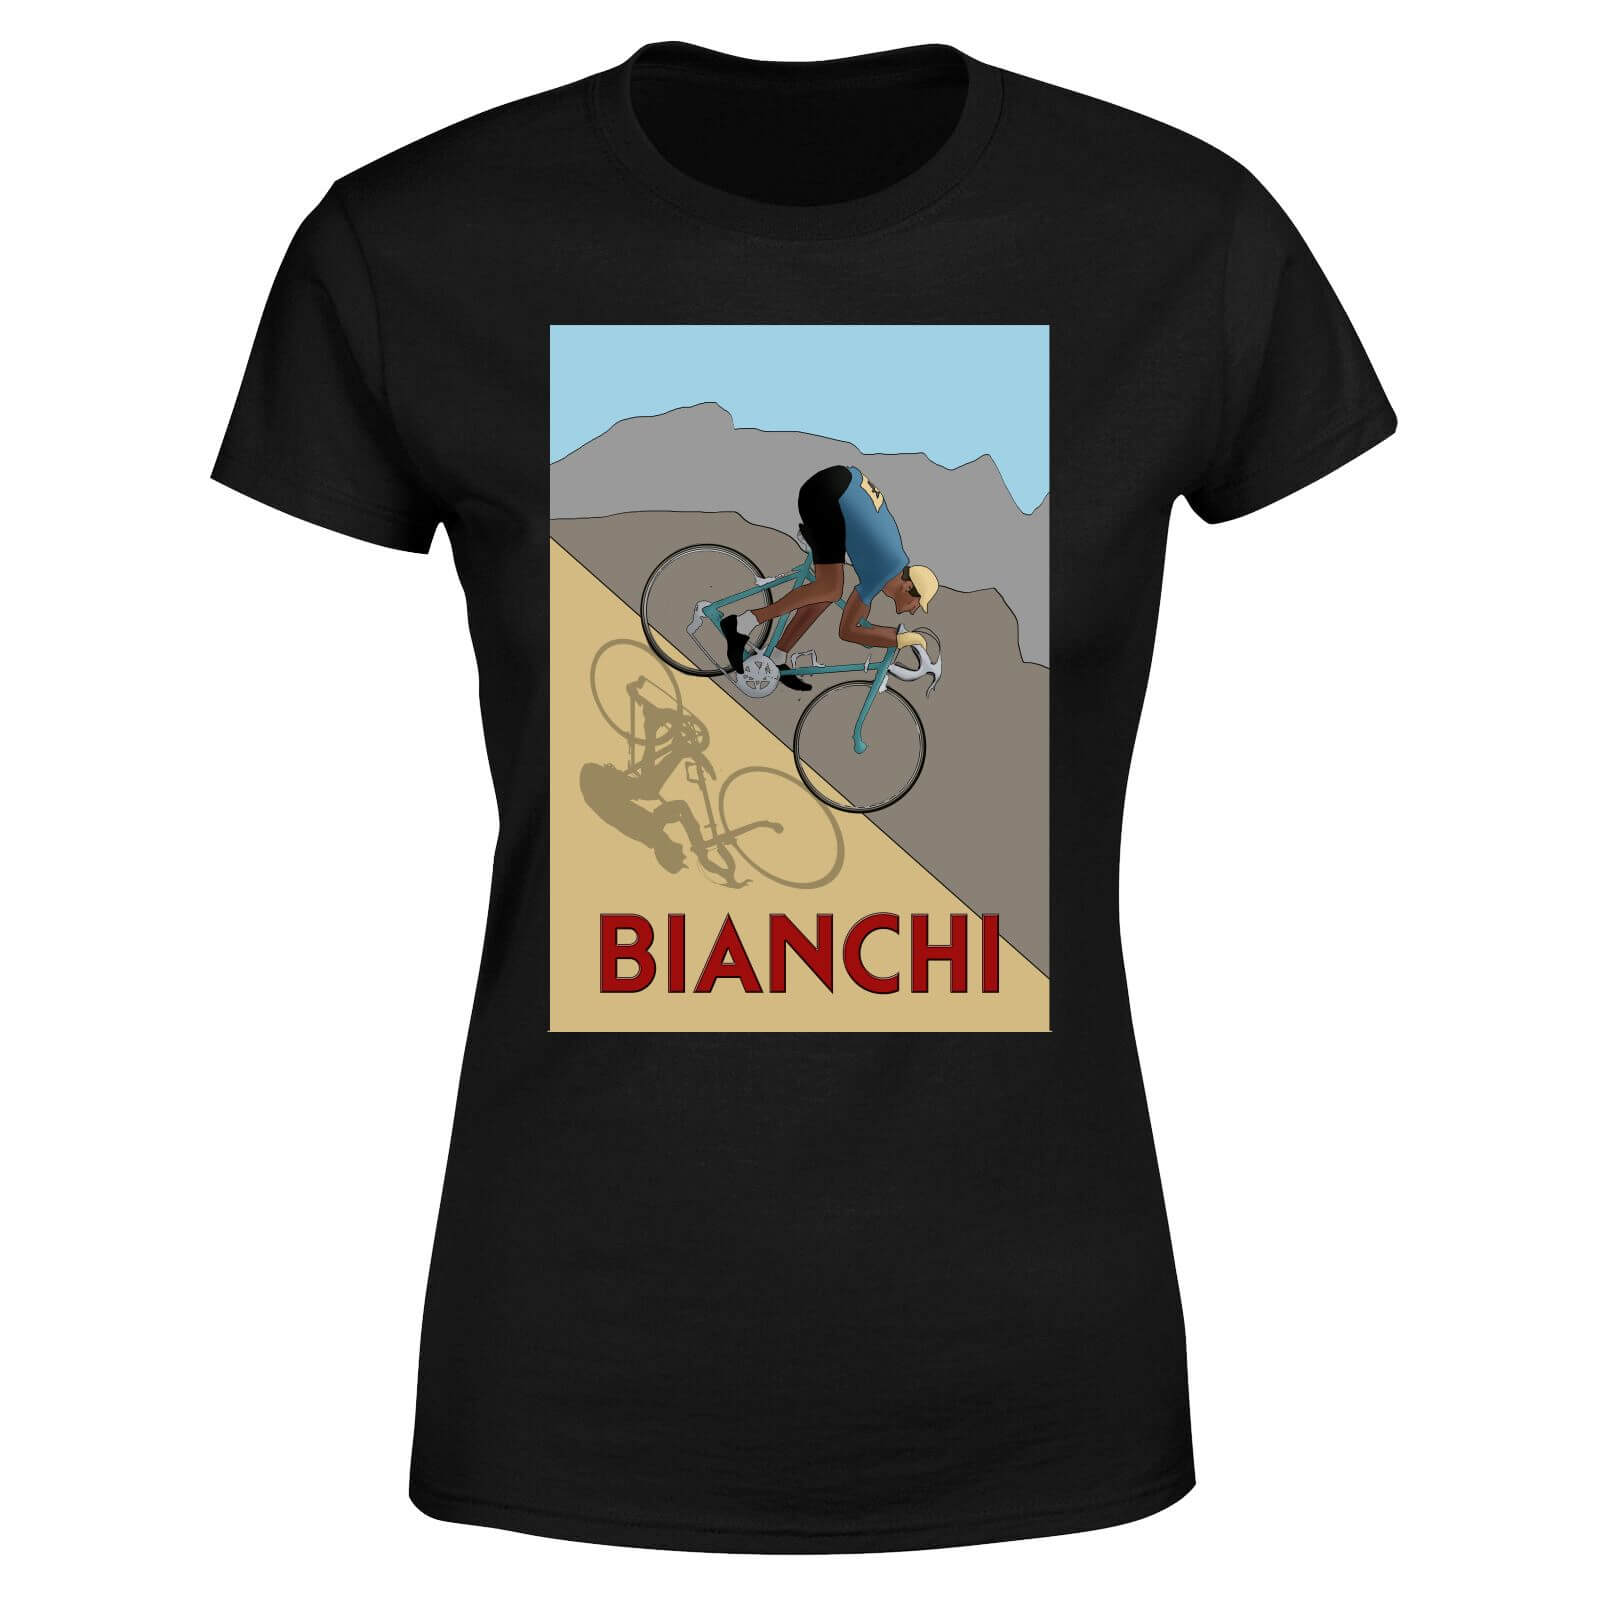 Bianchi Women's T-Shirt - Black - S - Black